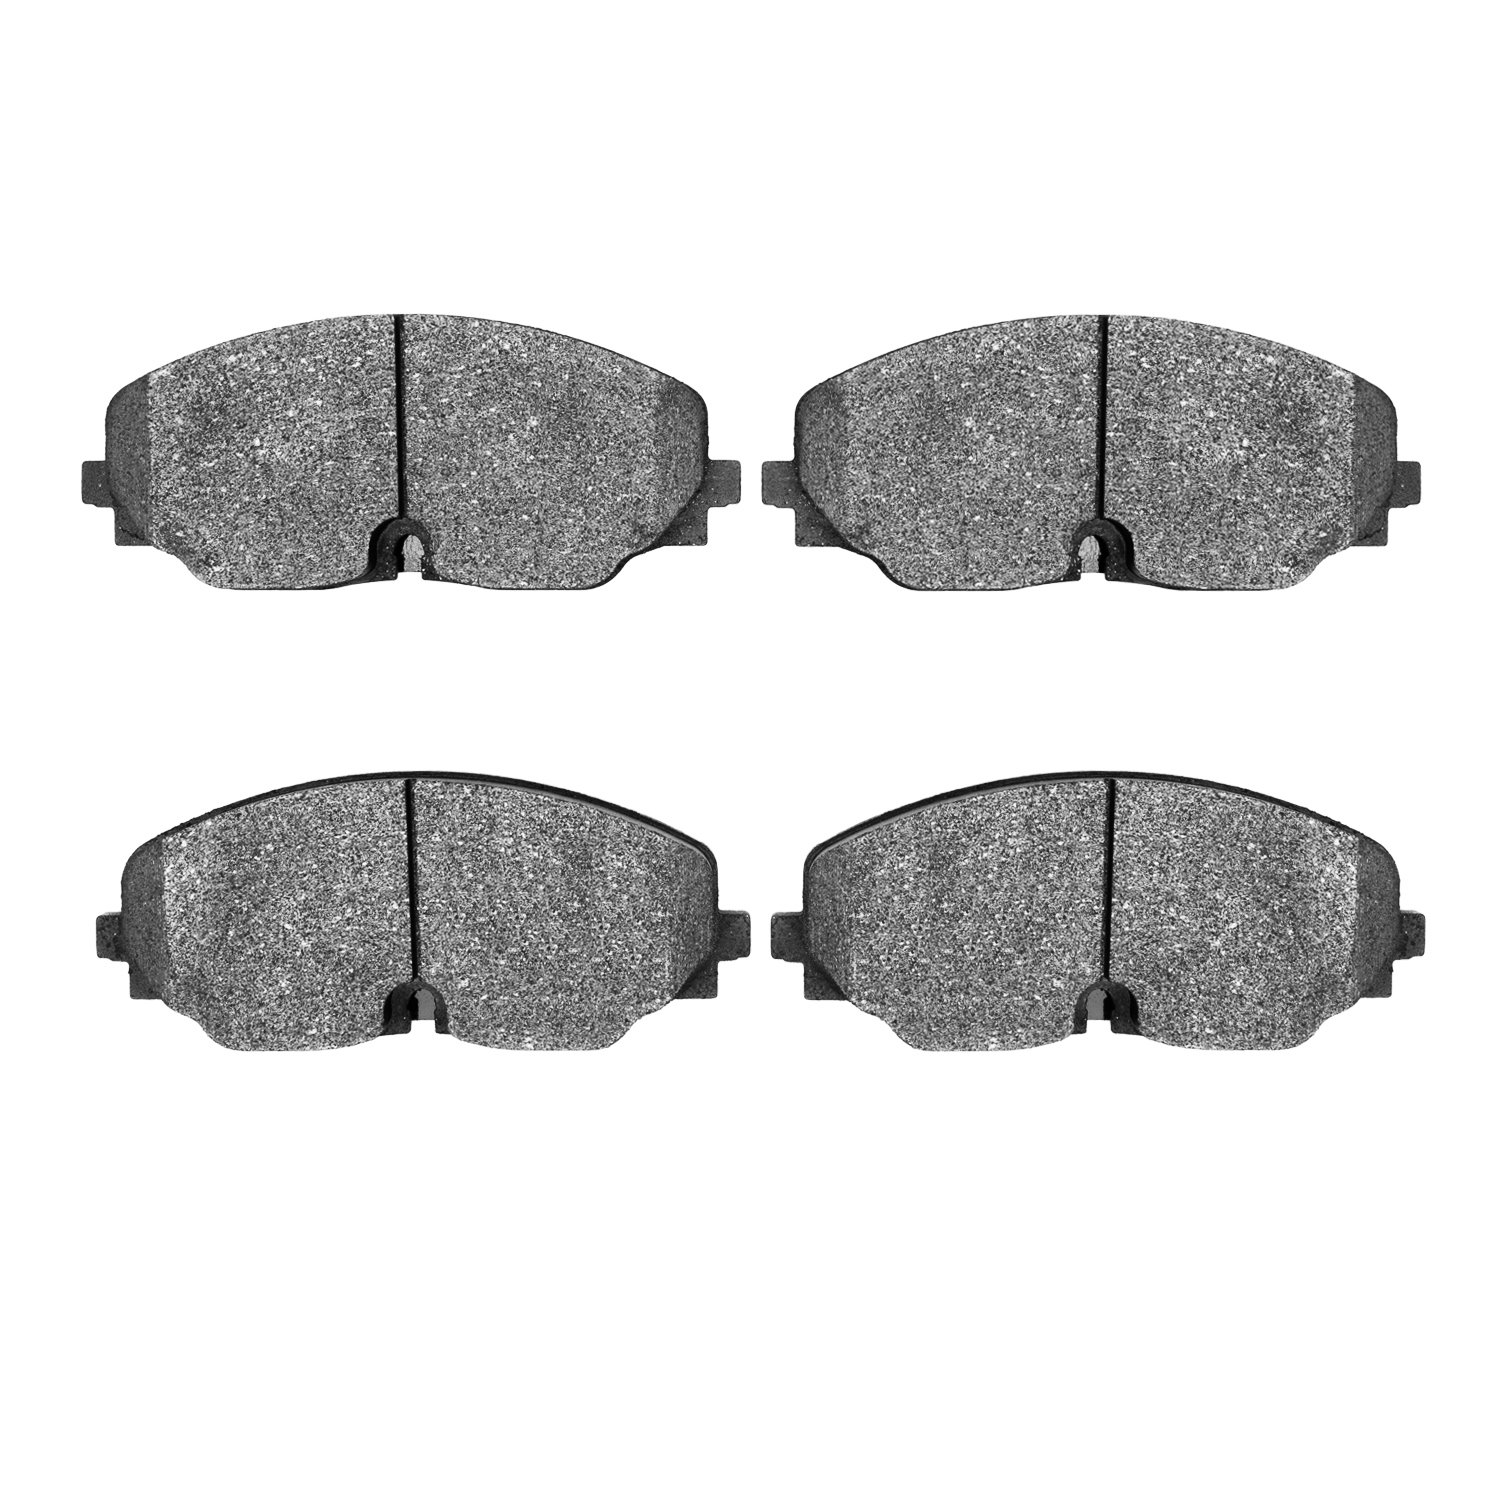 1551-2074-00 5000 Advanced Ceramic Brake Pads, Fits Select Audi/Volkswagen, Position: Front